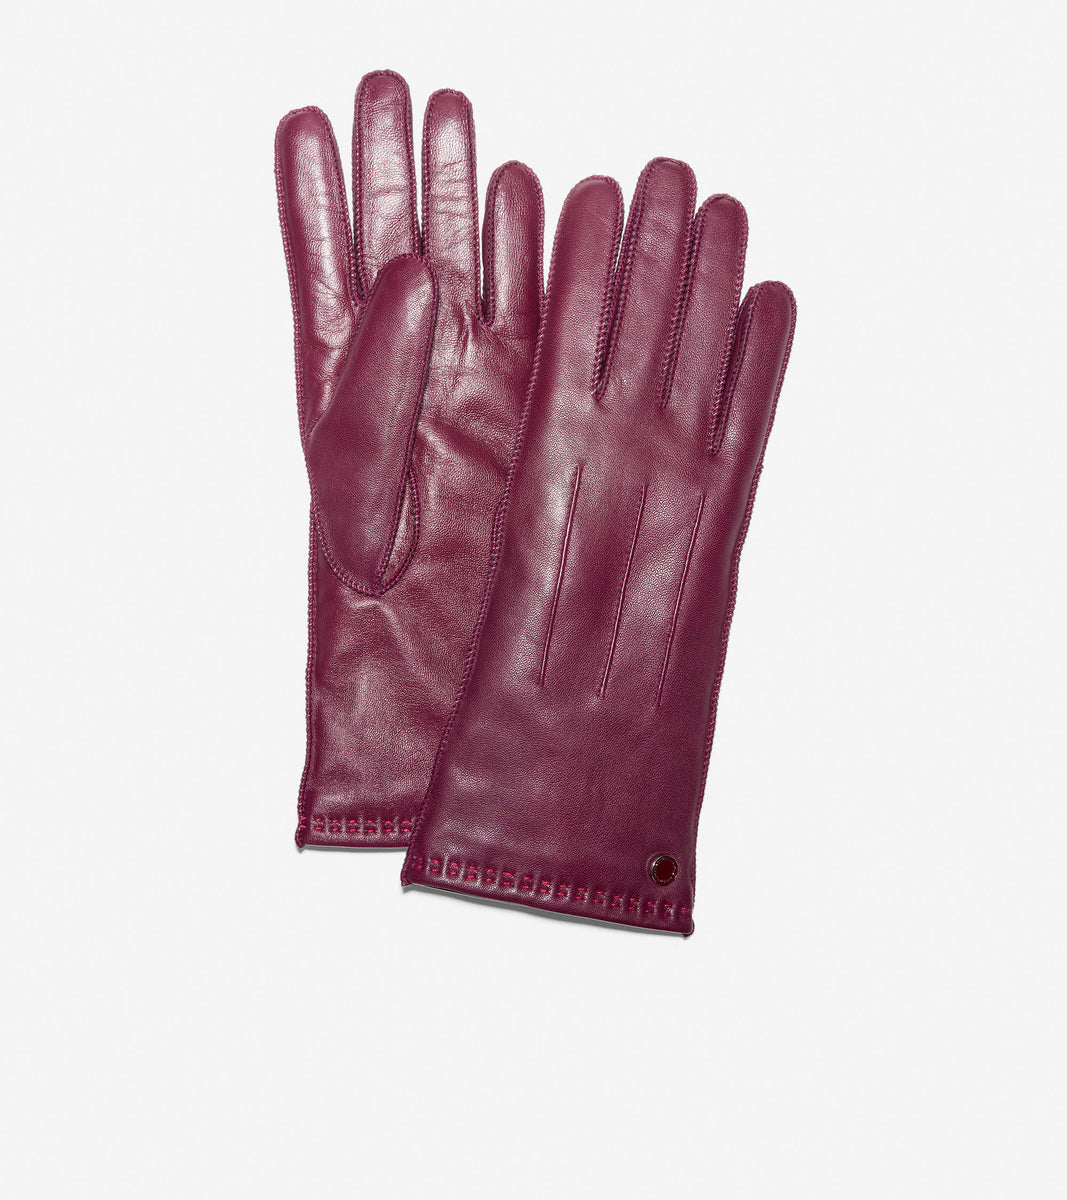 GRANDSERIES Leather Glove